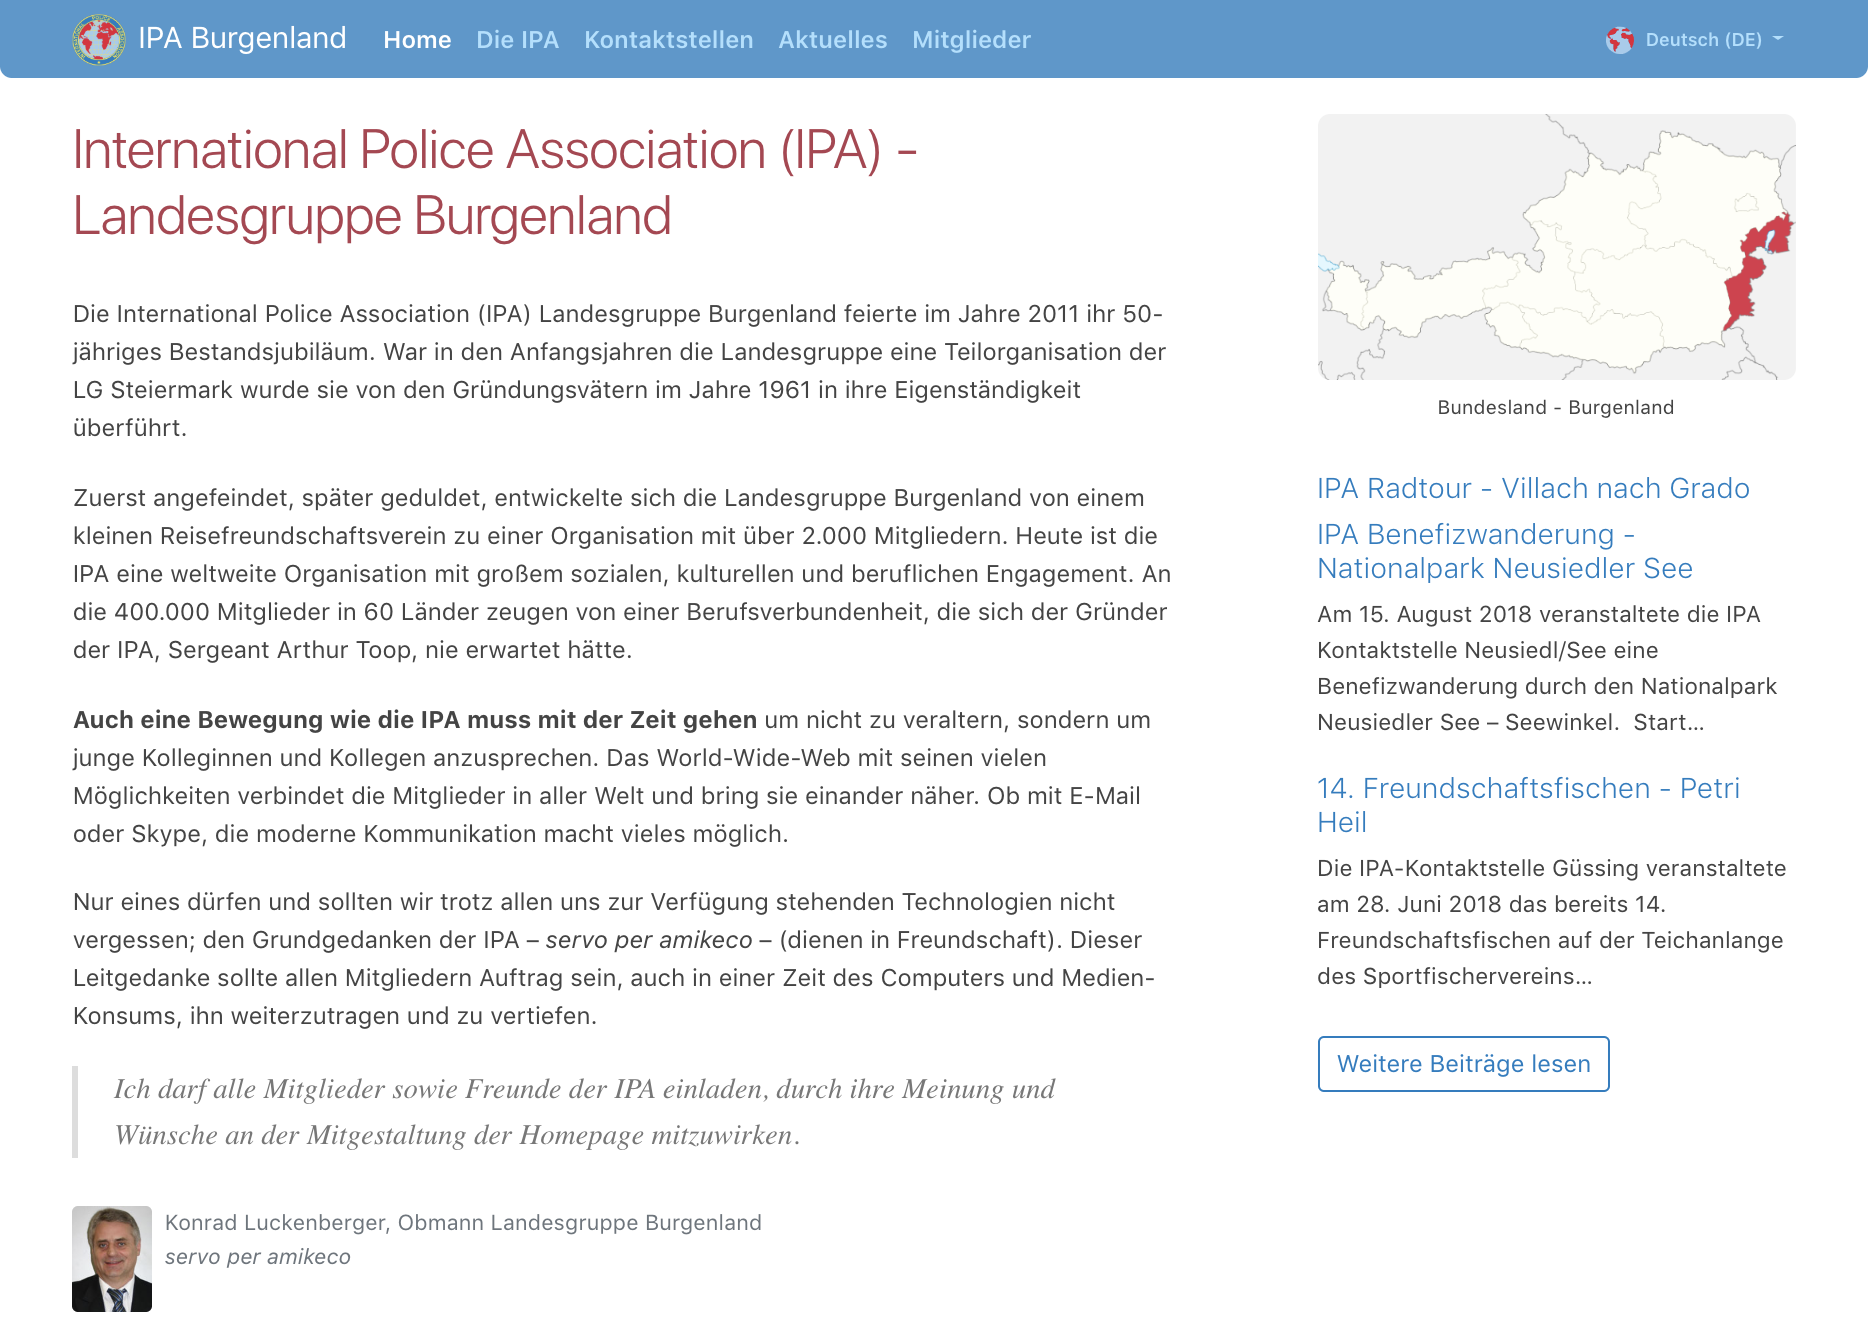 International Police Association Burgenland